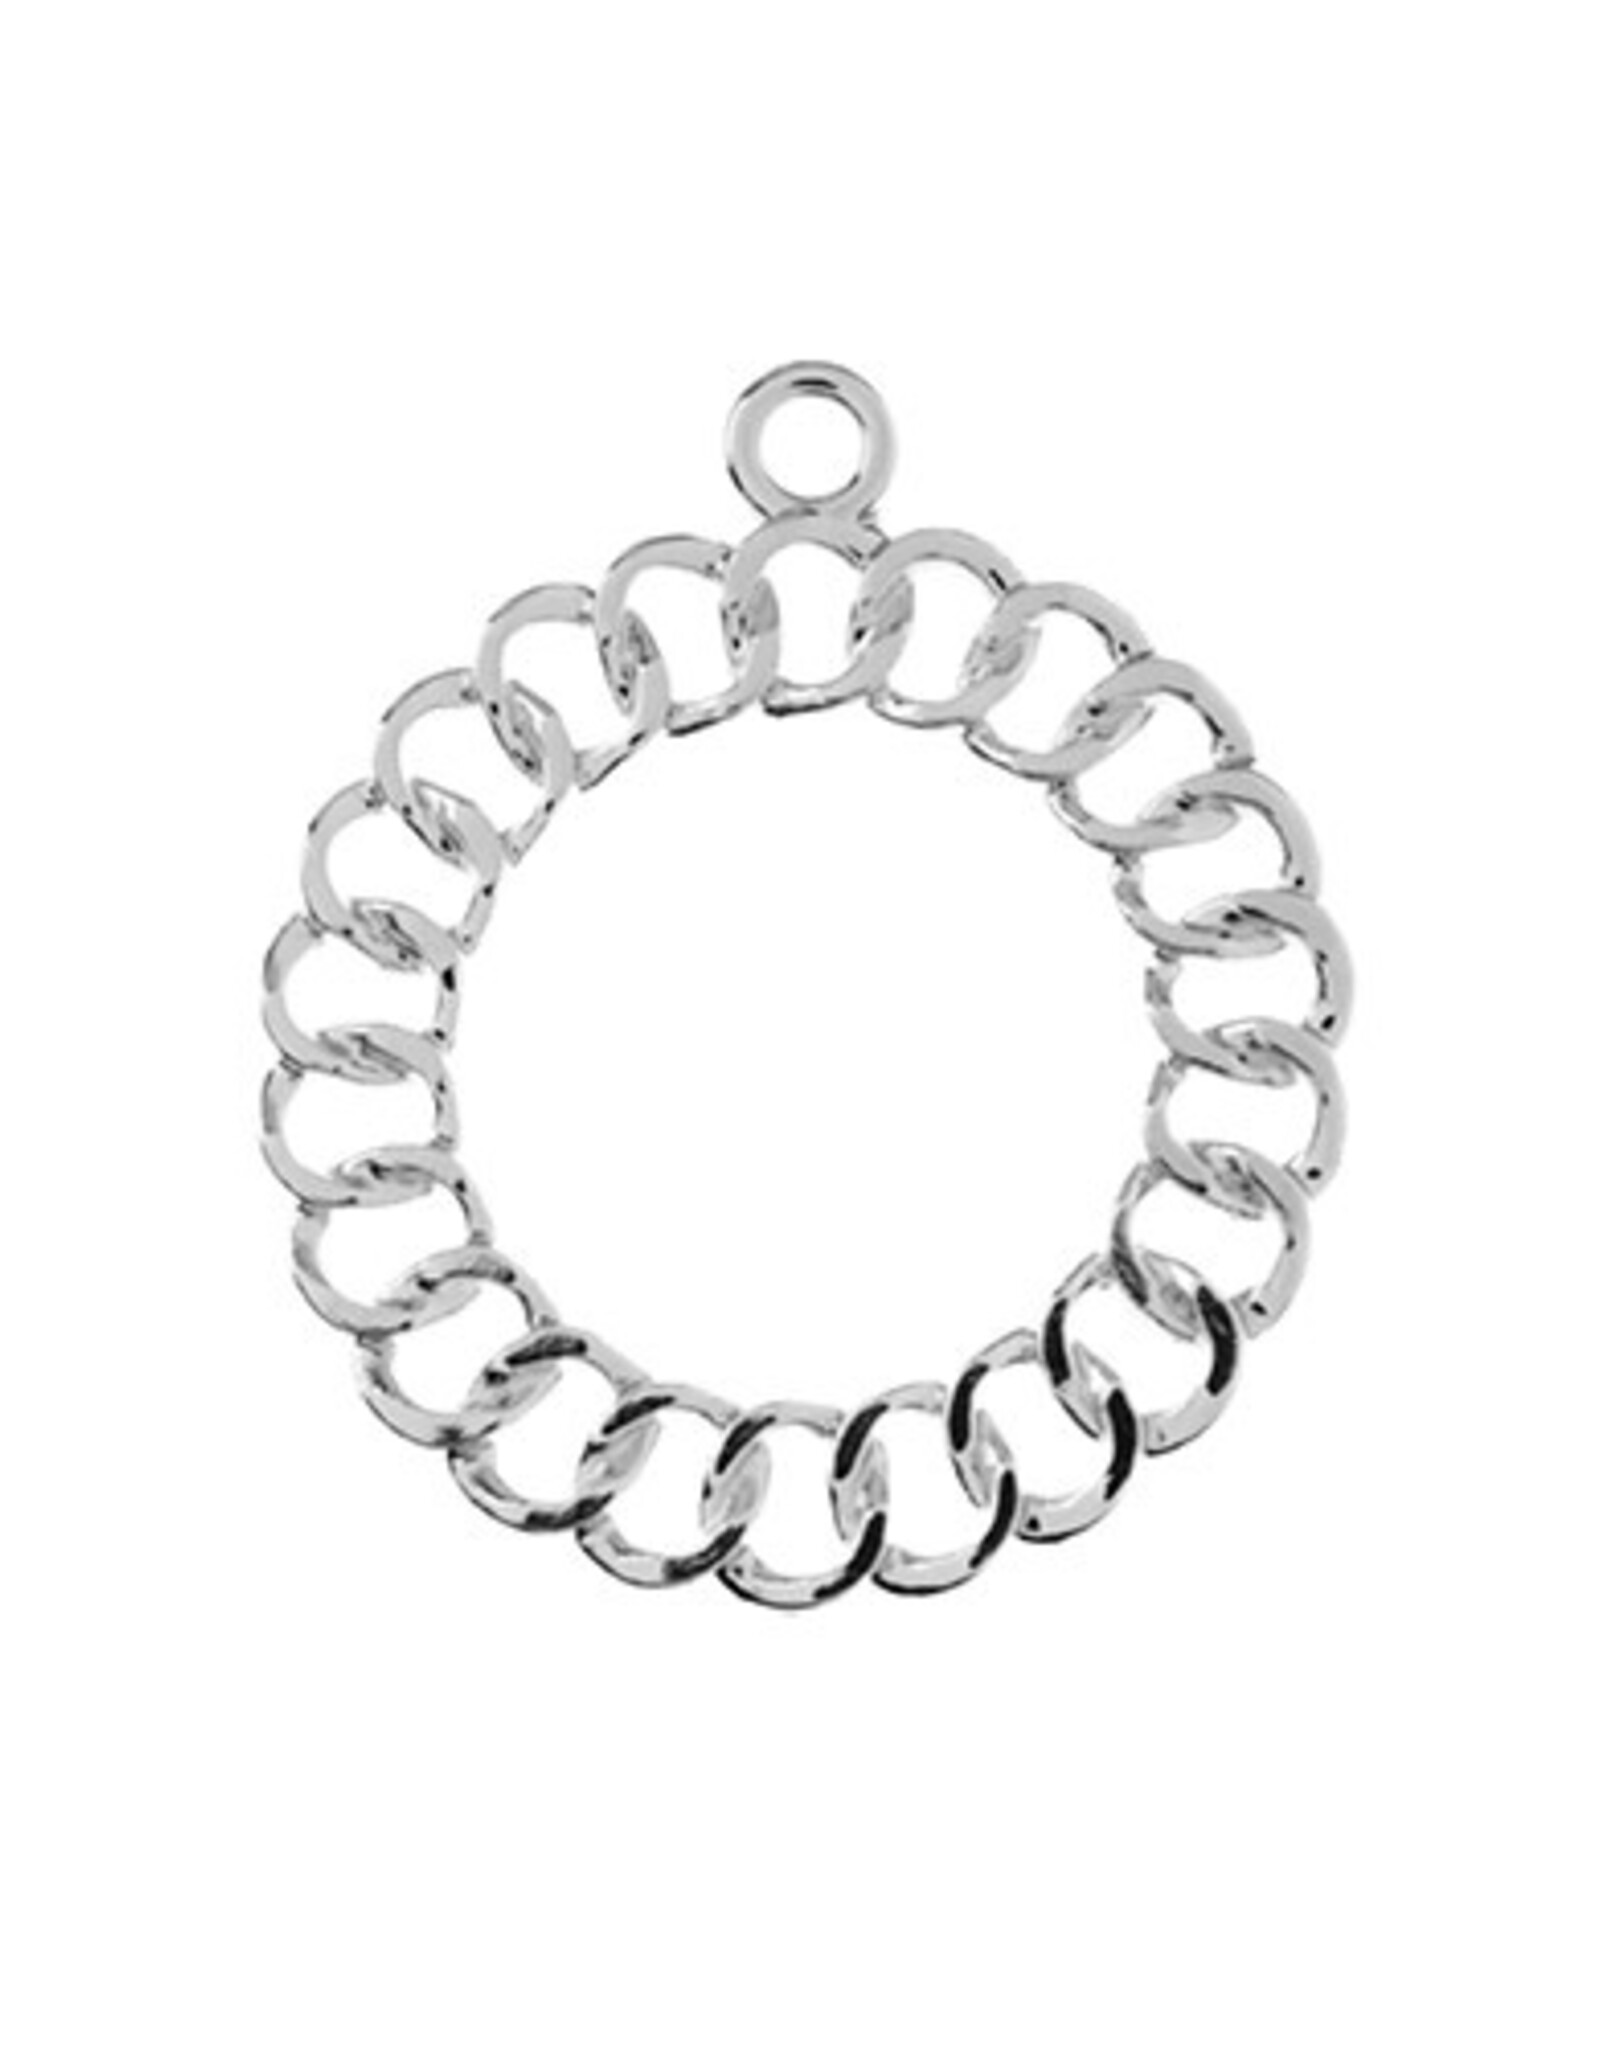 Beadwork Findings Silver Pendant Chain 28x32mm 5pcs